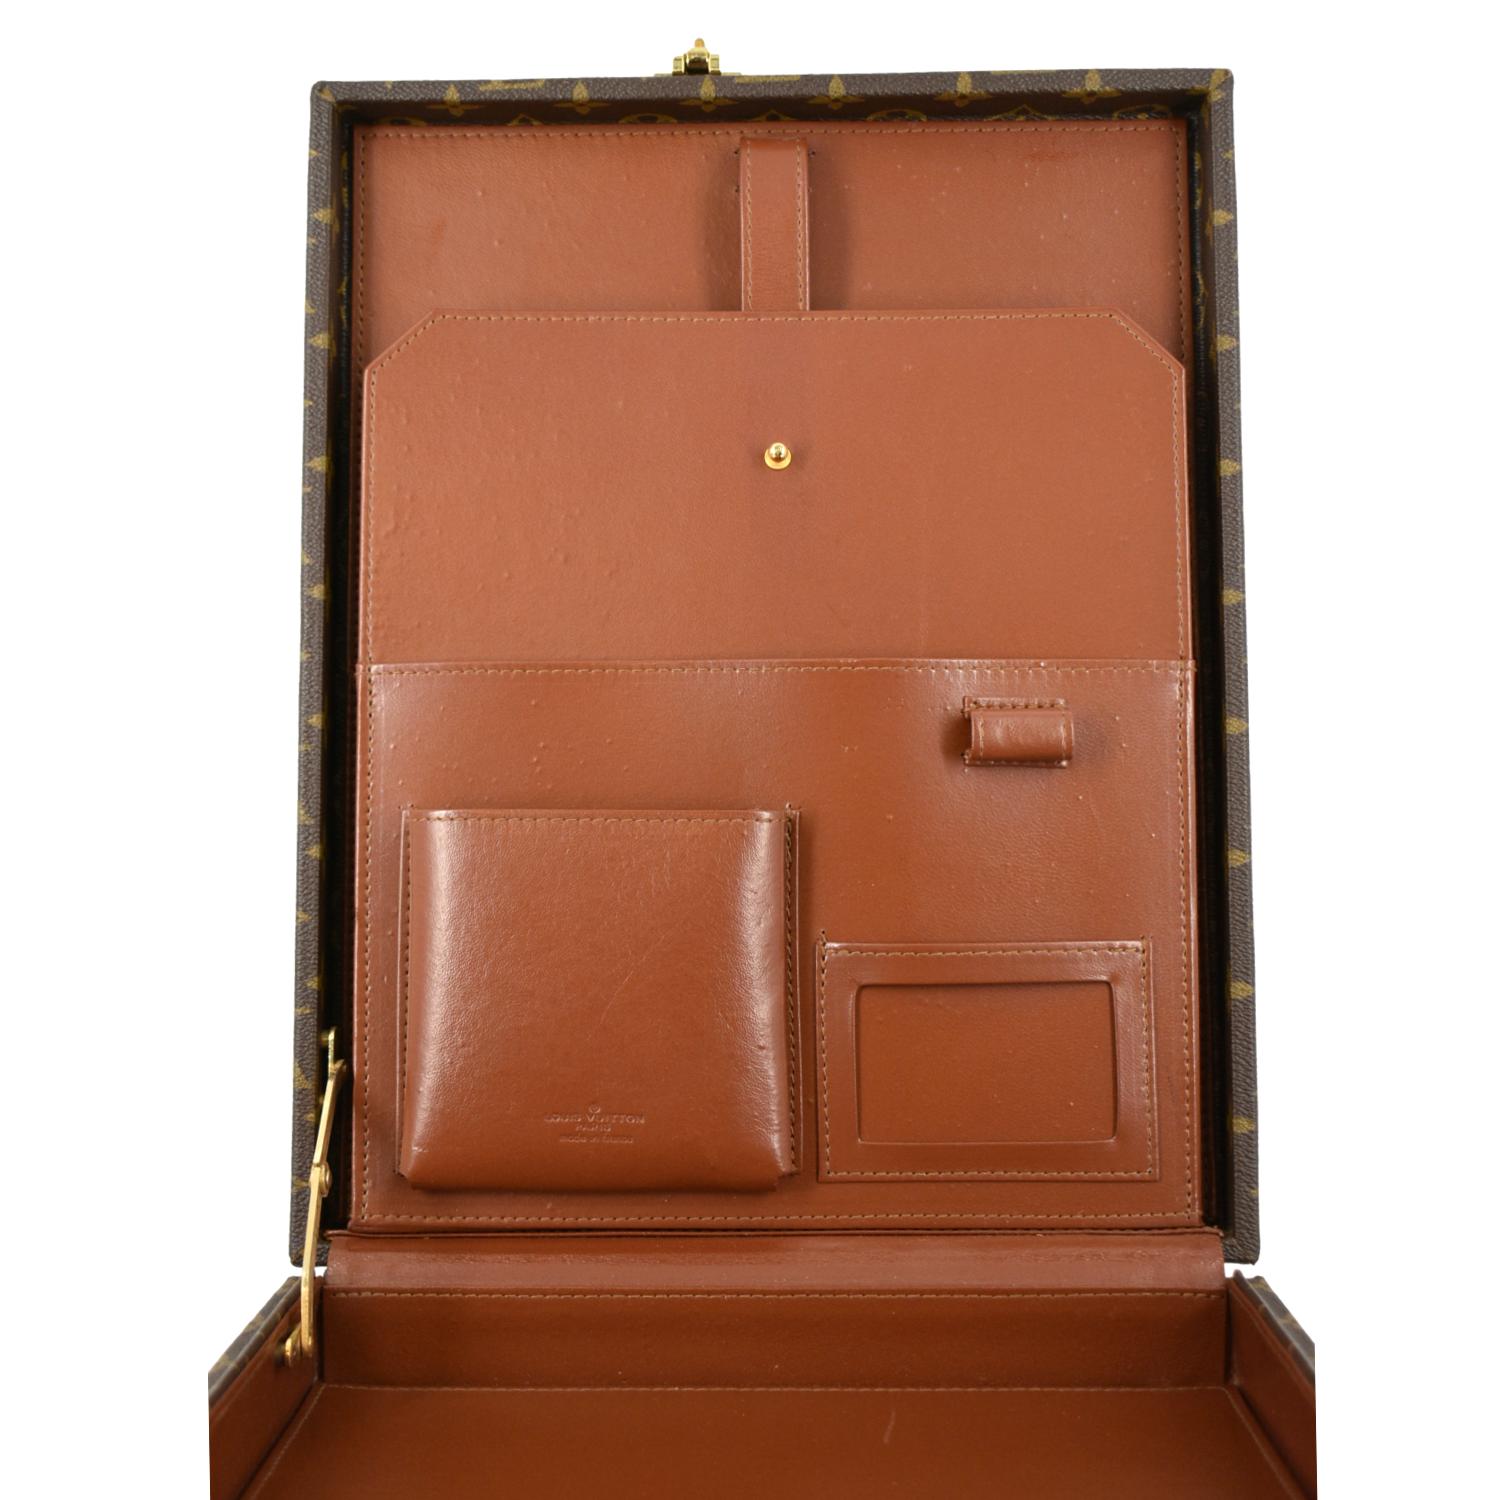 Monogram President Classeur Briefcase